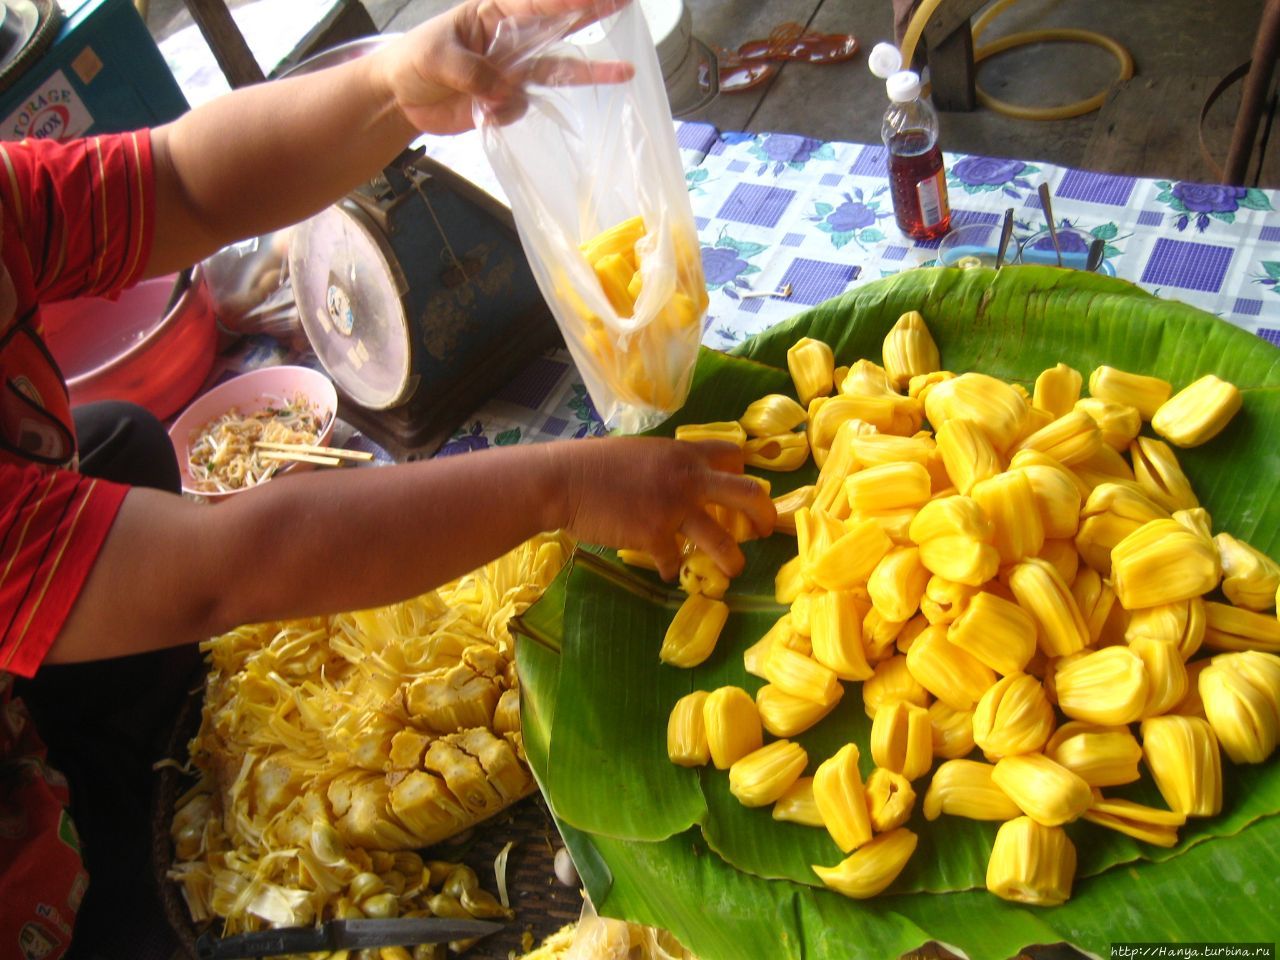 Джек-фрукт. Фото из интернета Нячанг, Вьетнам